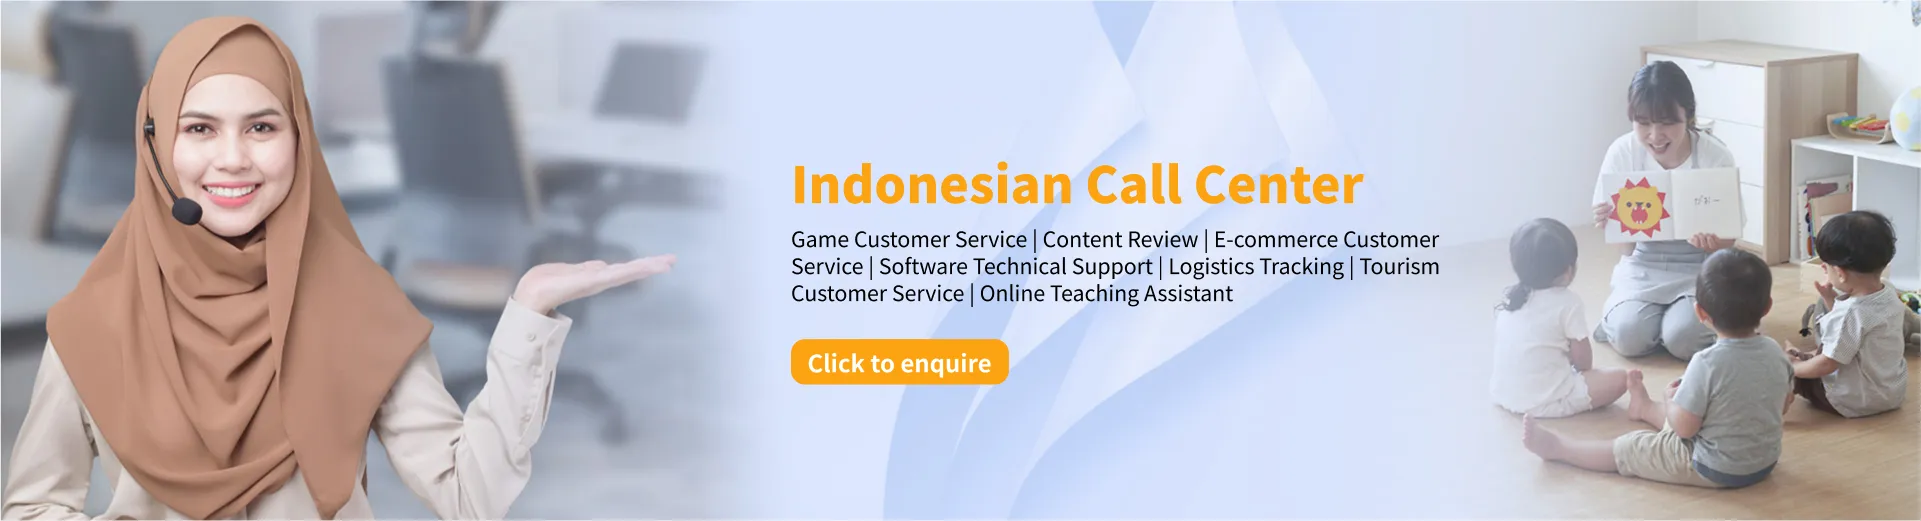 Indonesian Call Center